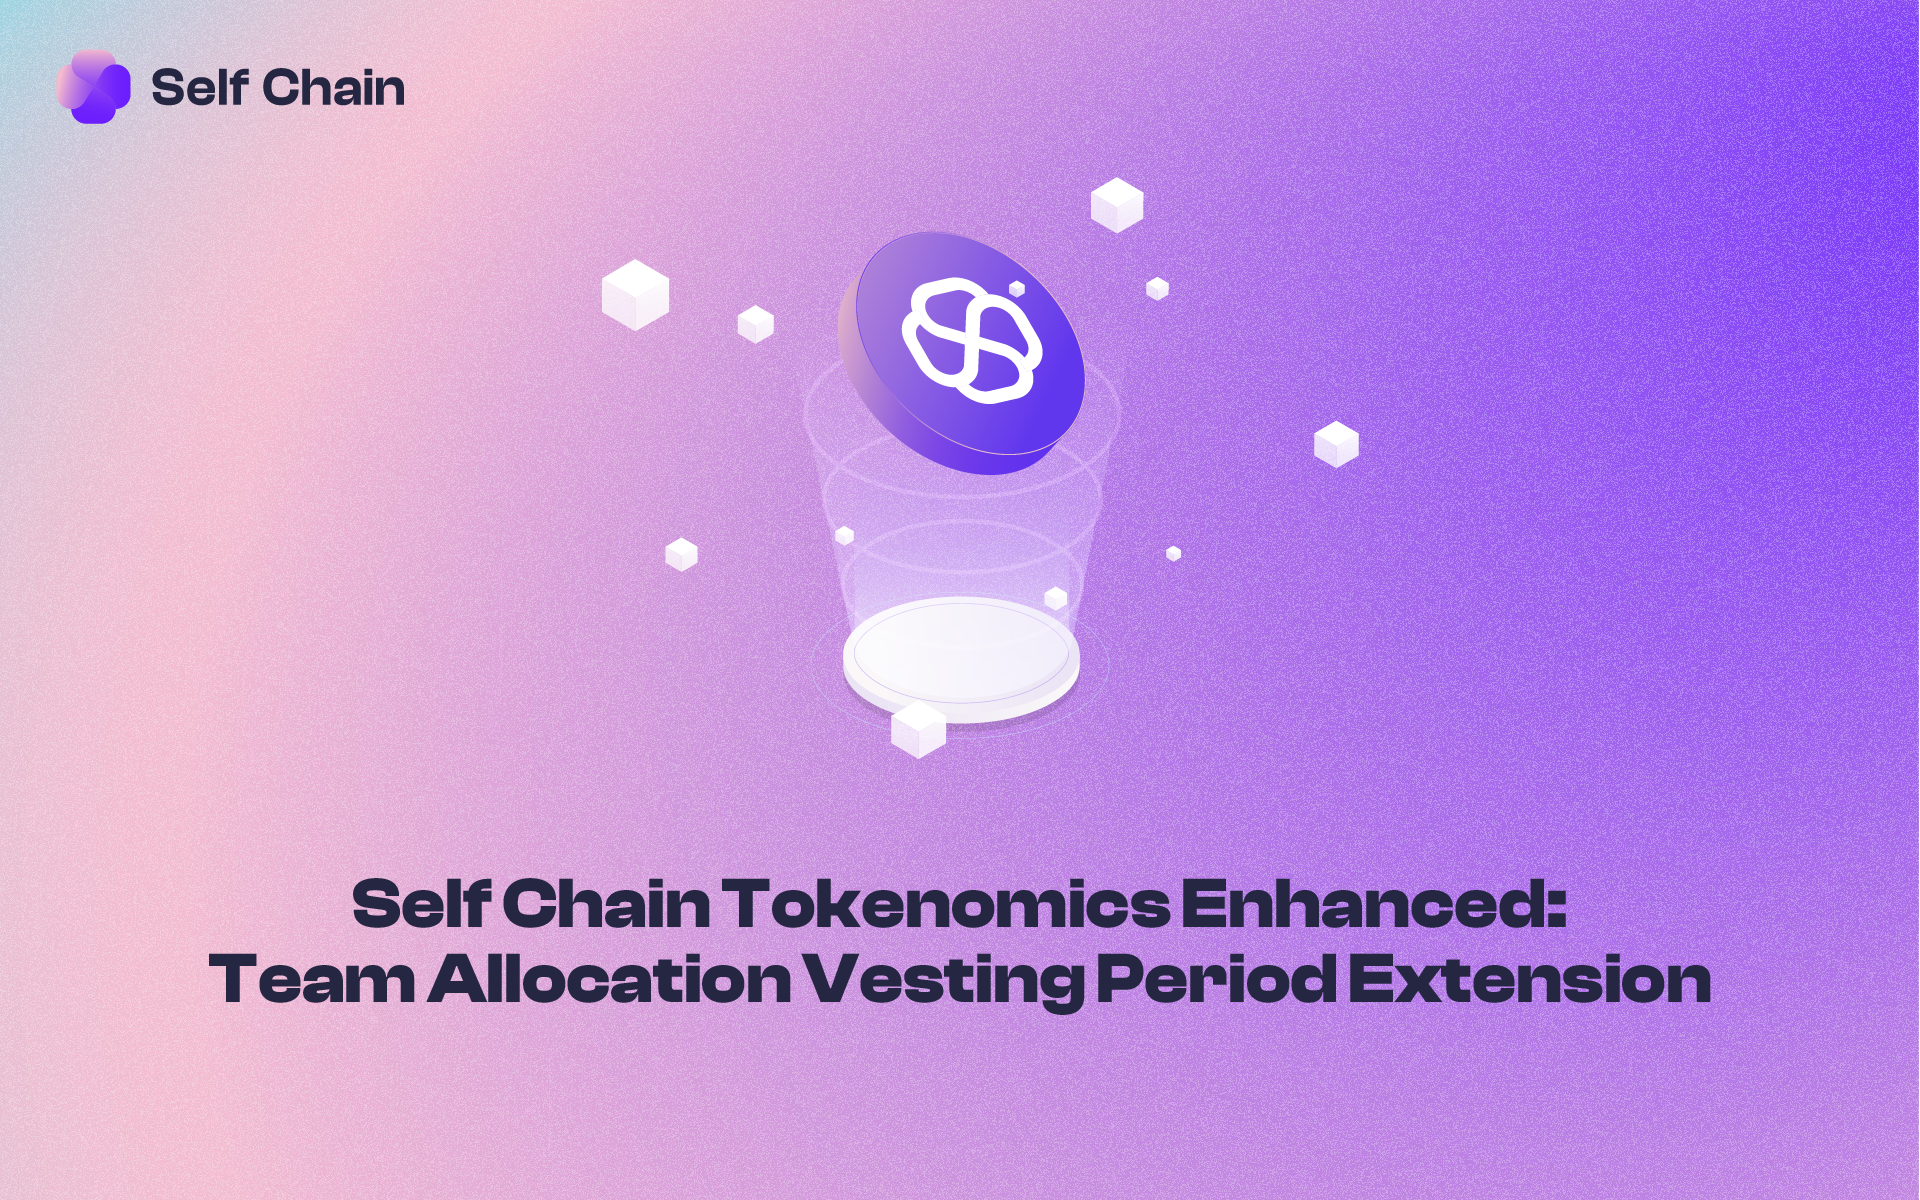 Self Chain Tokenomics Enhanced: Team Allocation Vesting Period Extension